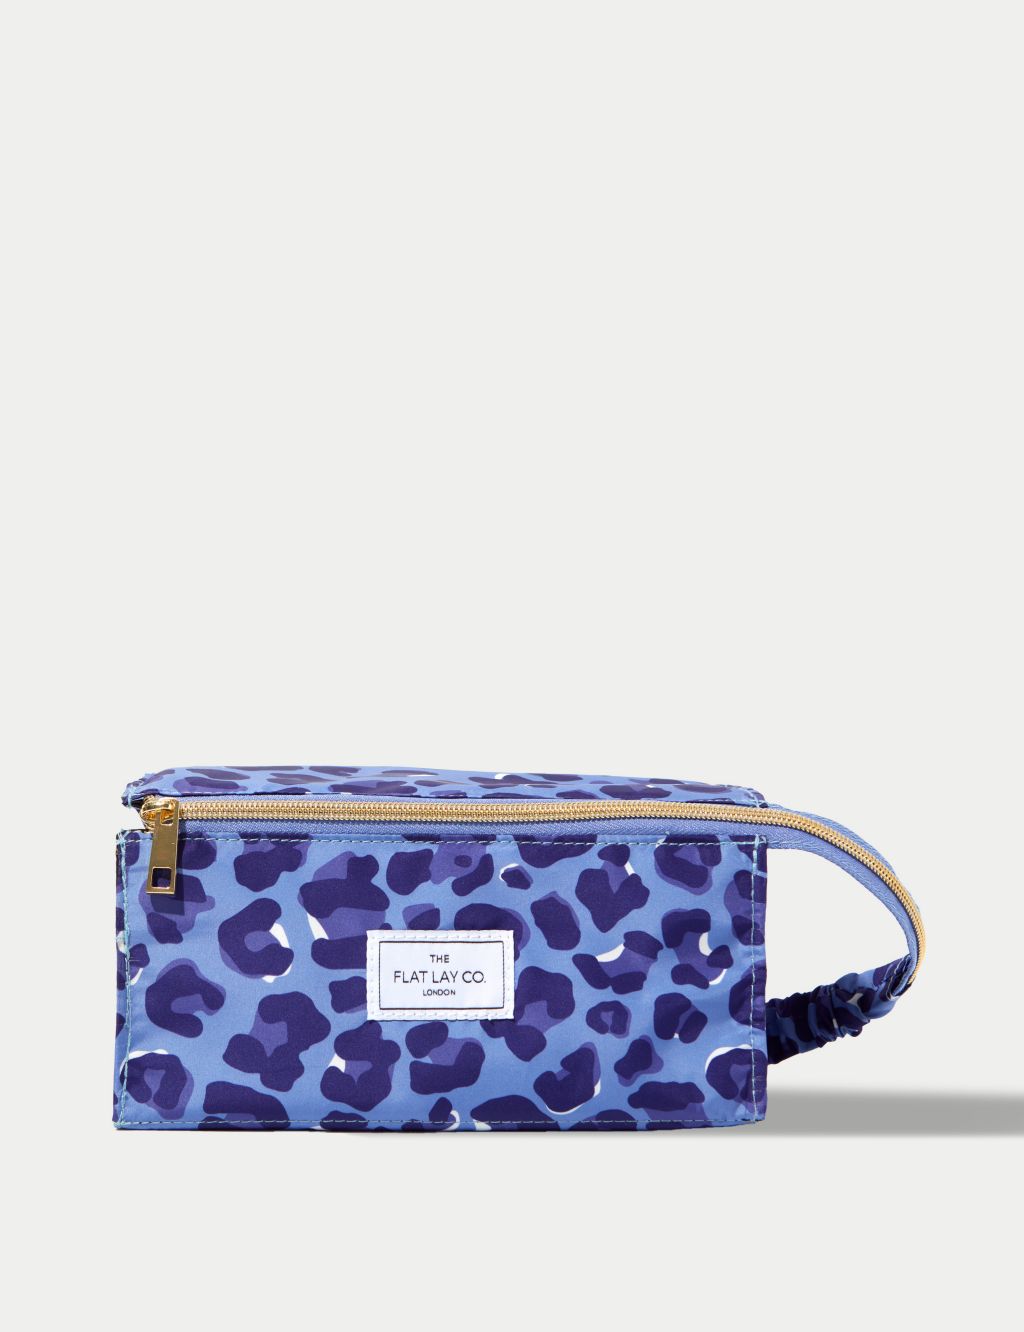 The Flat Lay Co. Open Flat Box Bag in Blue Leopard